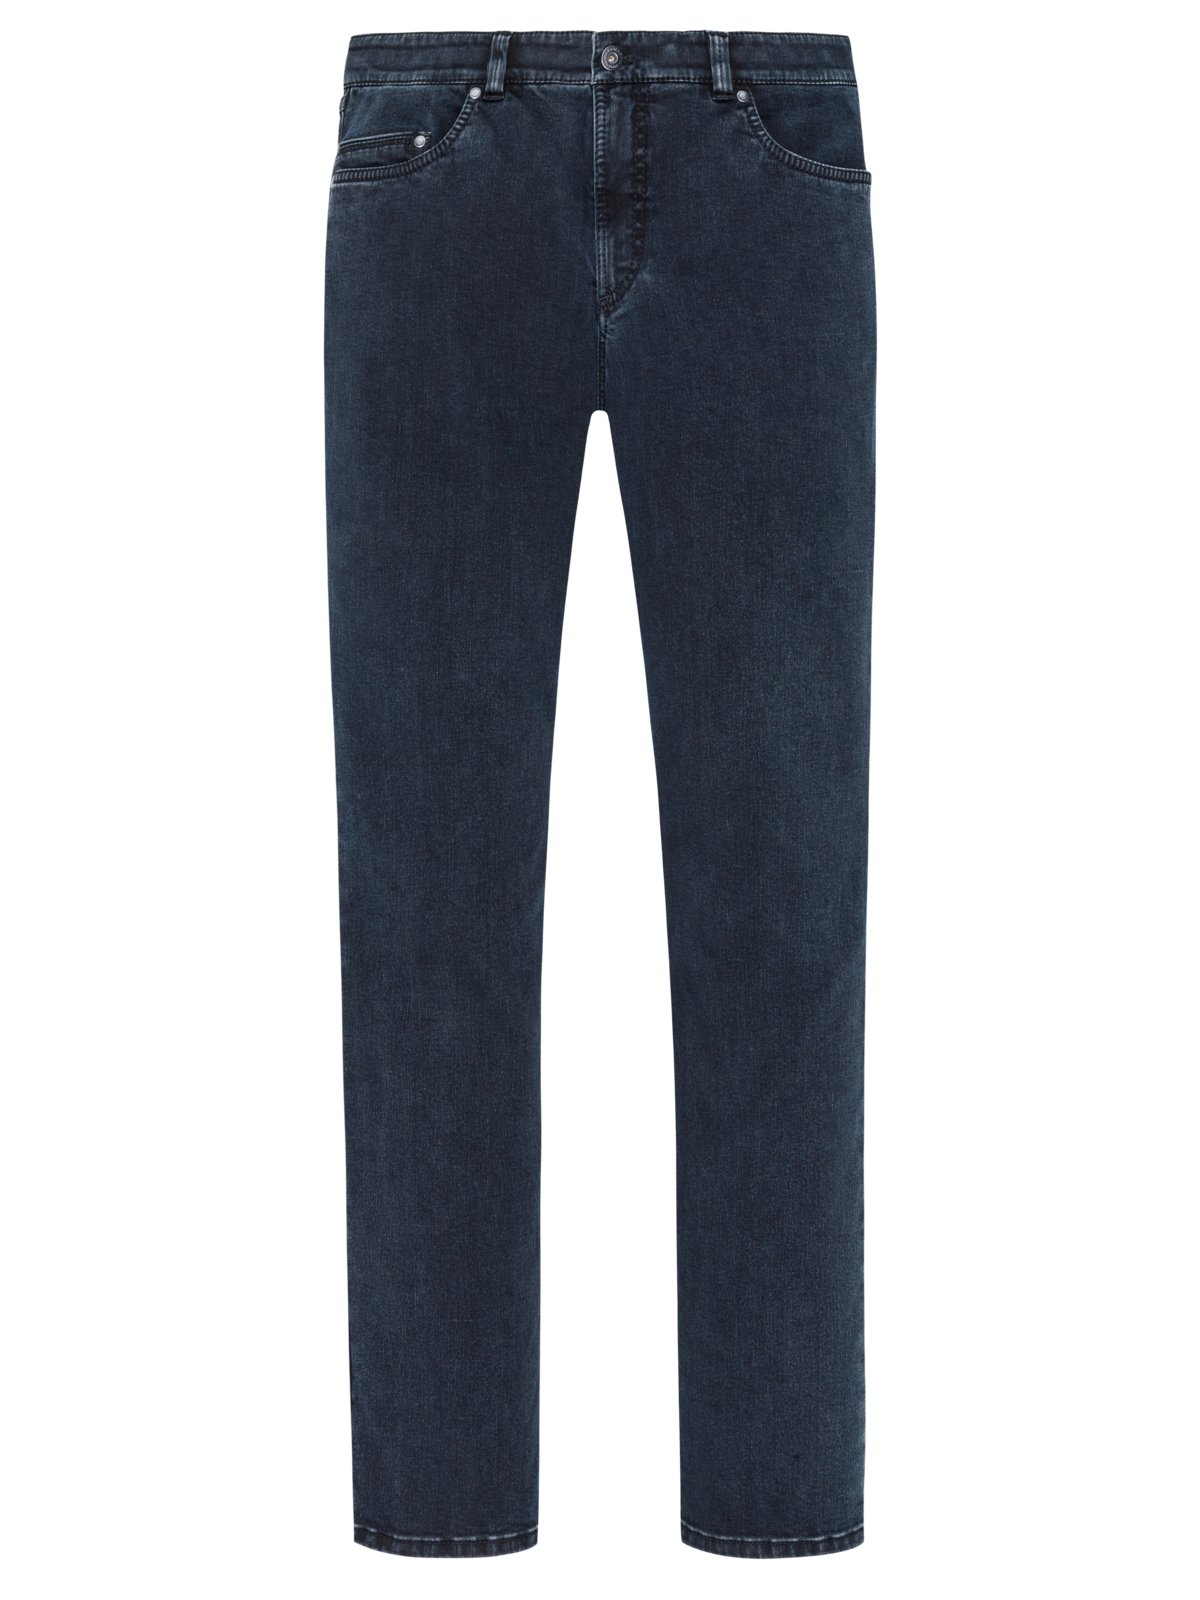 Eurex 5-Pocket Jeans in High-Stretch